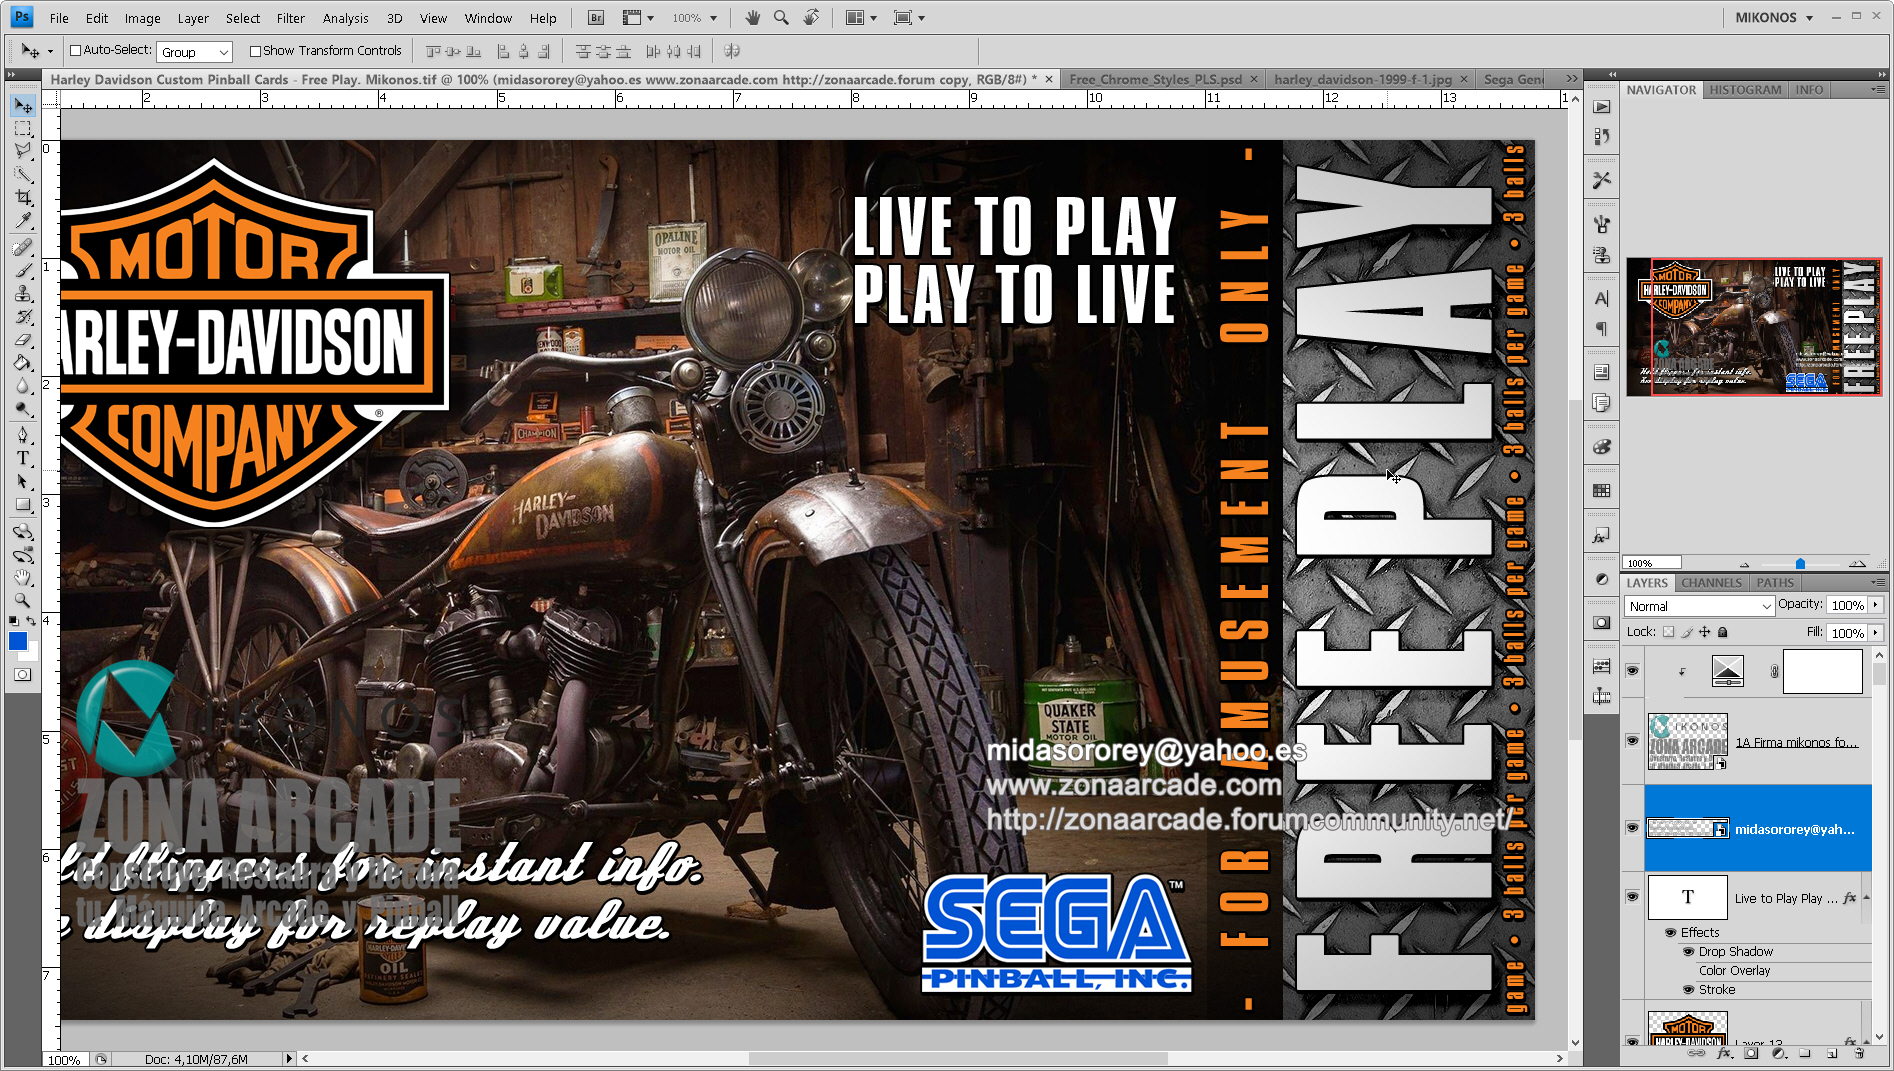 Harley Davidson Custom Pinball Card - Free Play. Mikonos2